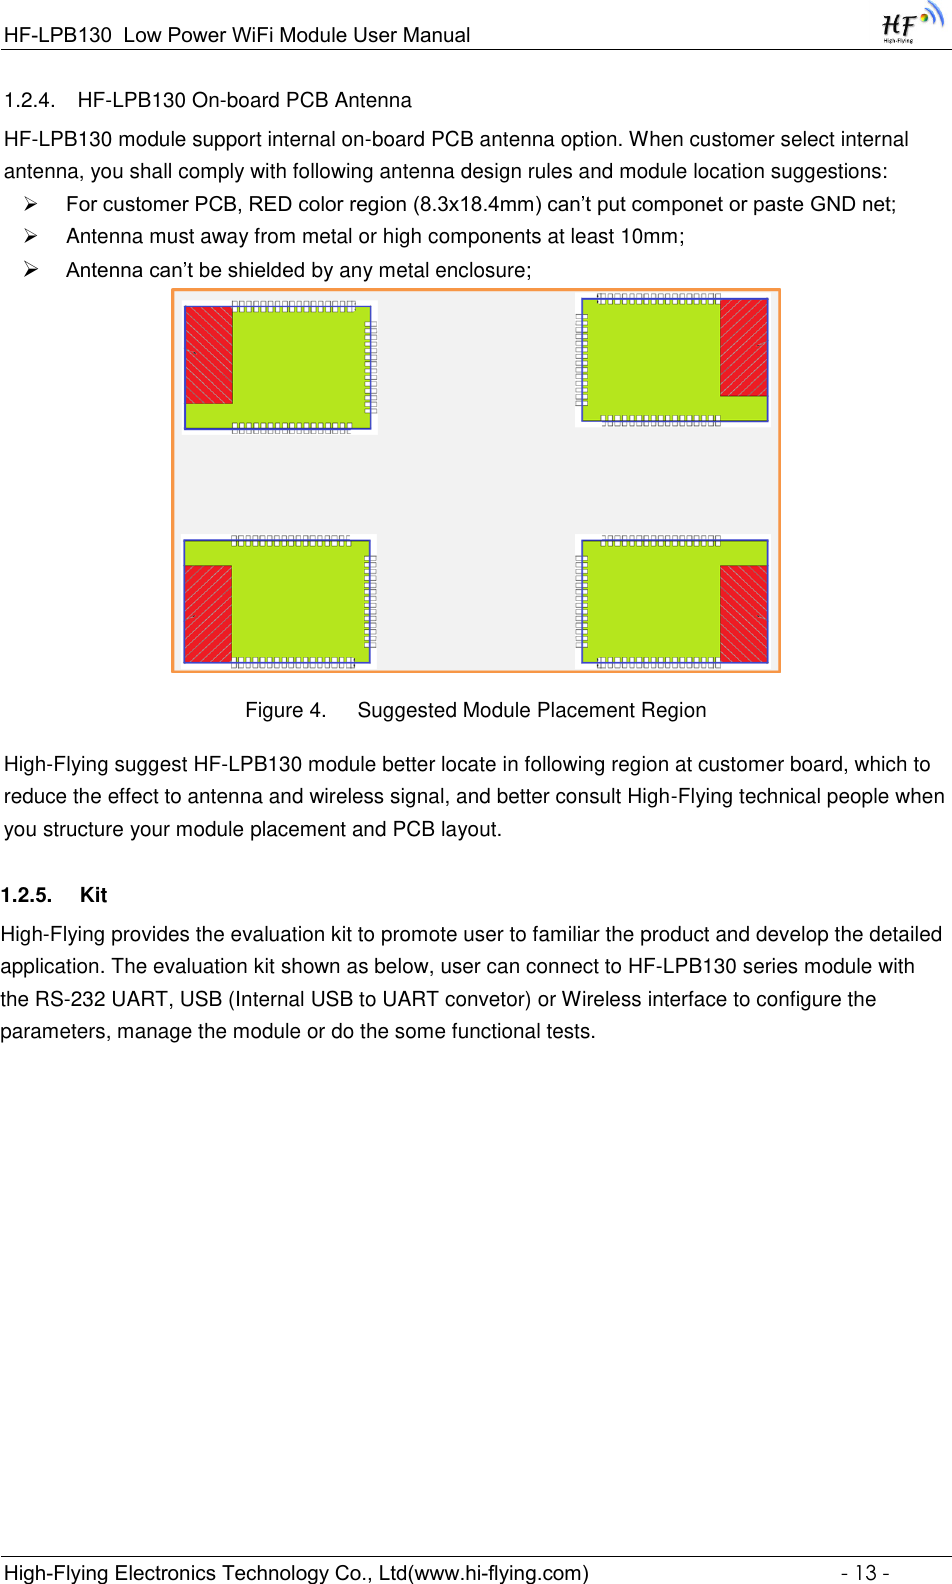 Page 13 of High Flying Electronics Technology HF-LPB130 Wi-Fi Module User Manual GPON SFU System Design